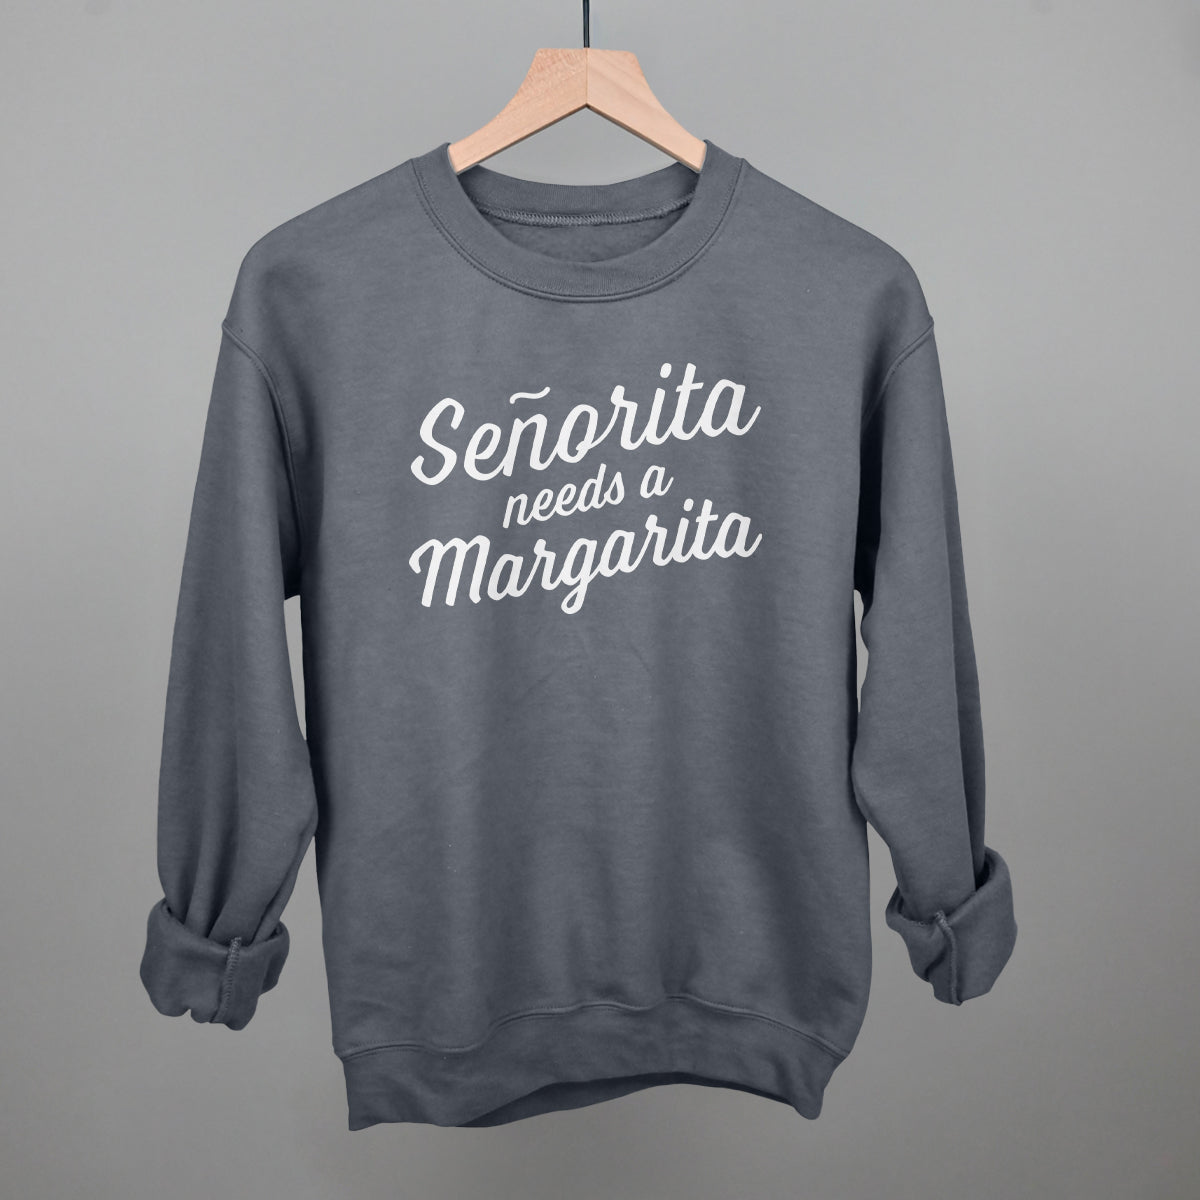 Señorita needs a Margarita